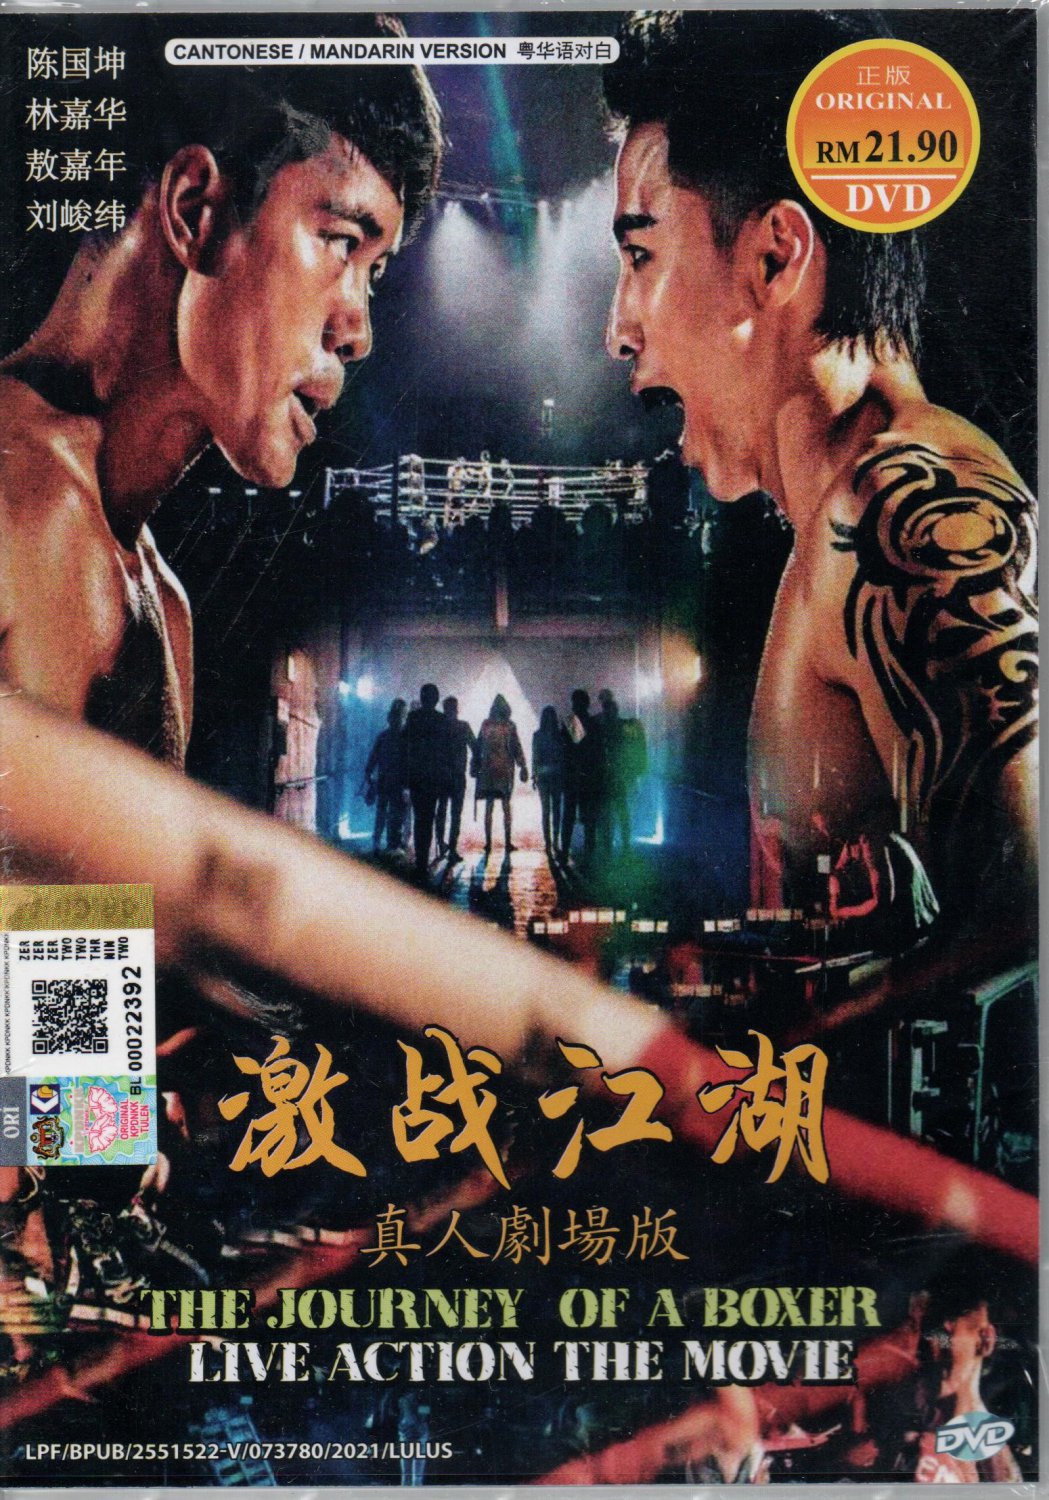 Chinese Movie DVD The Journey Of A Boxer æ¿�æ��æ±�æ¹� (2020 Film) English Subtitle